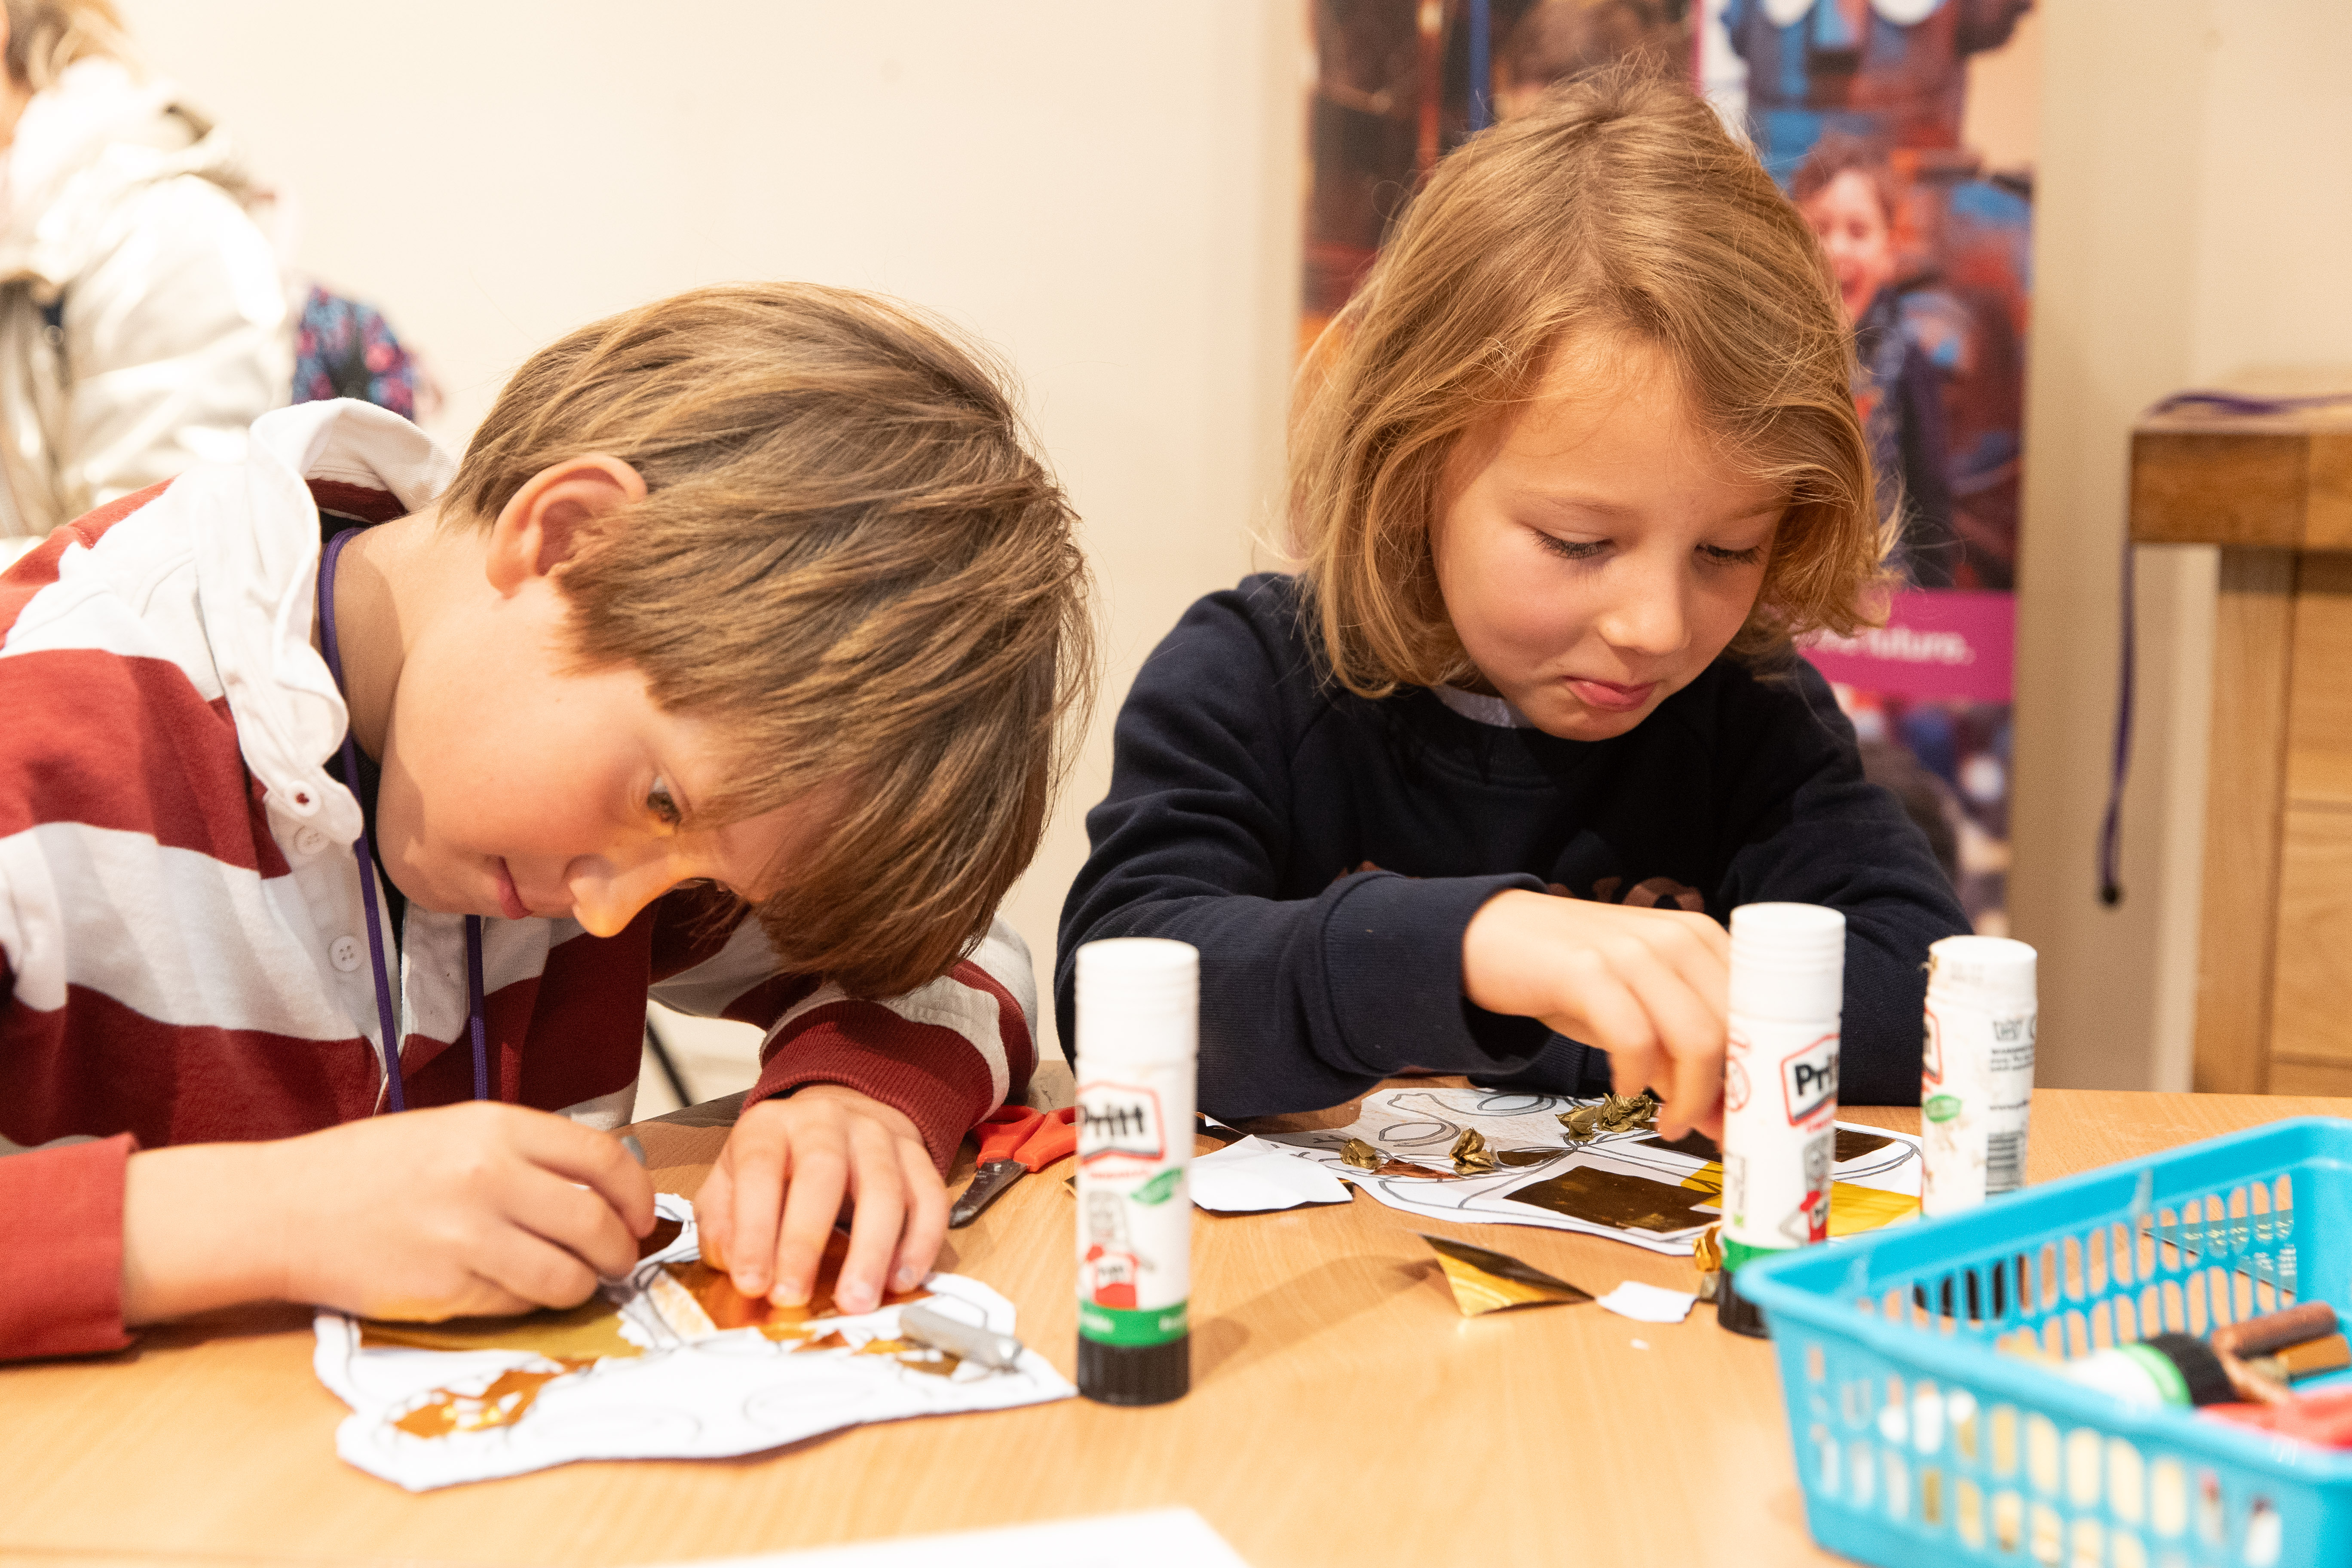 Image: Children taking part in a craft activity